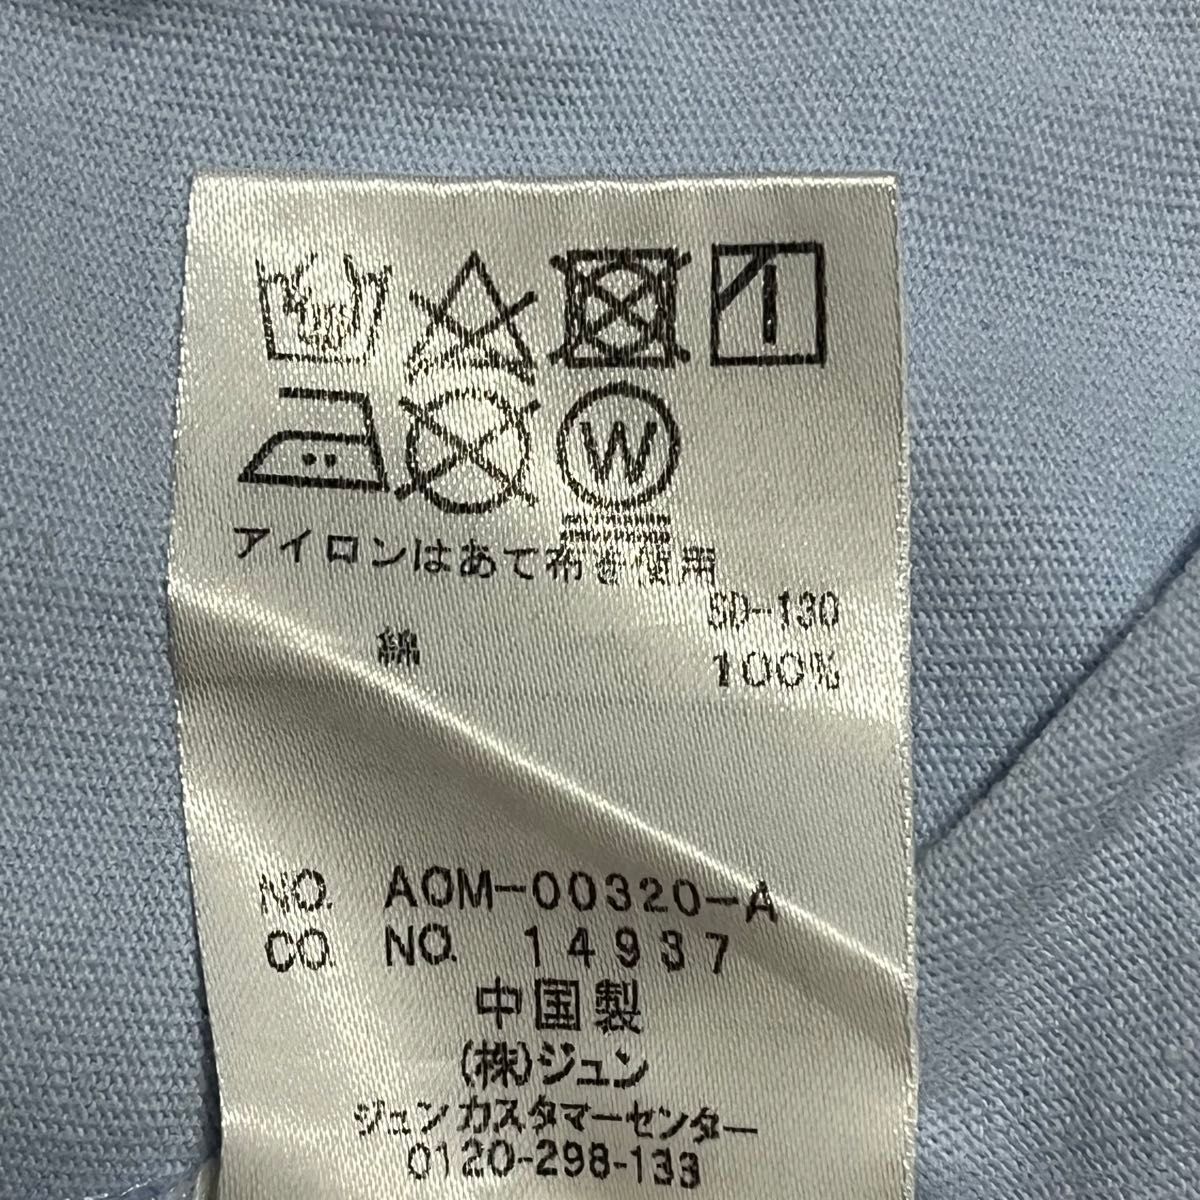 JUNRed KANGOL メンズ 半袖ロゴＴシャツ  ラインブルー XLサイズ